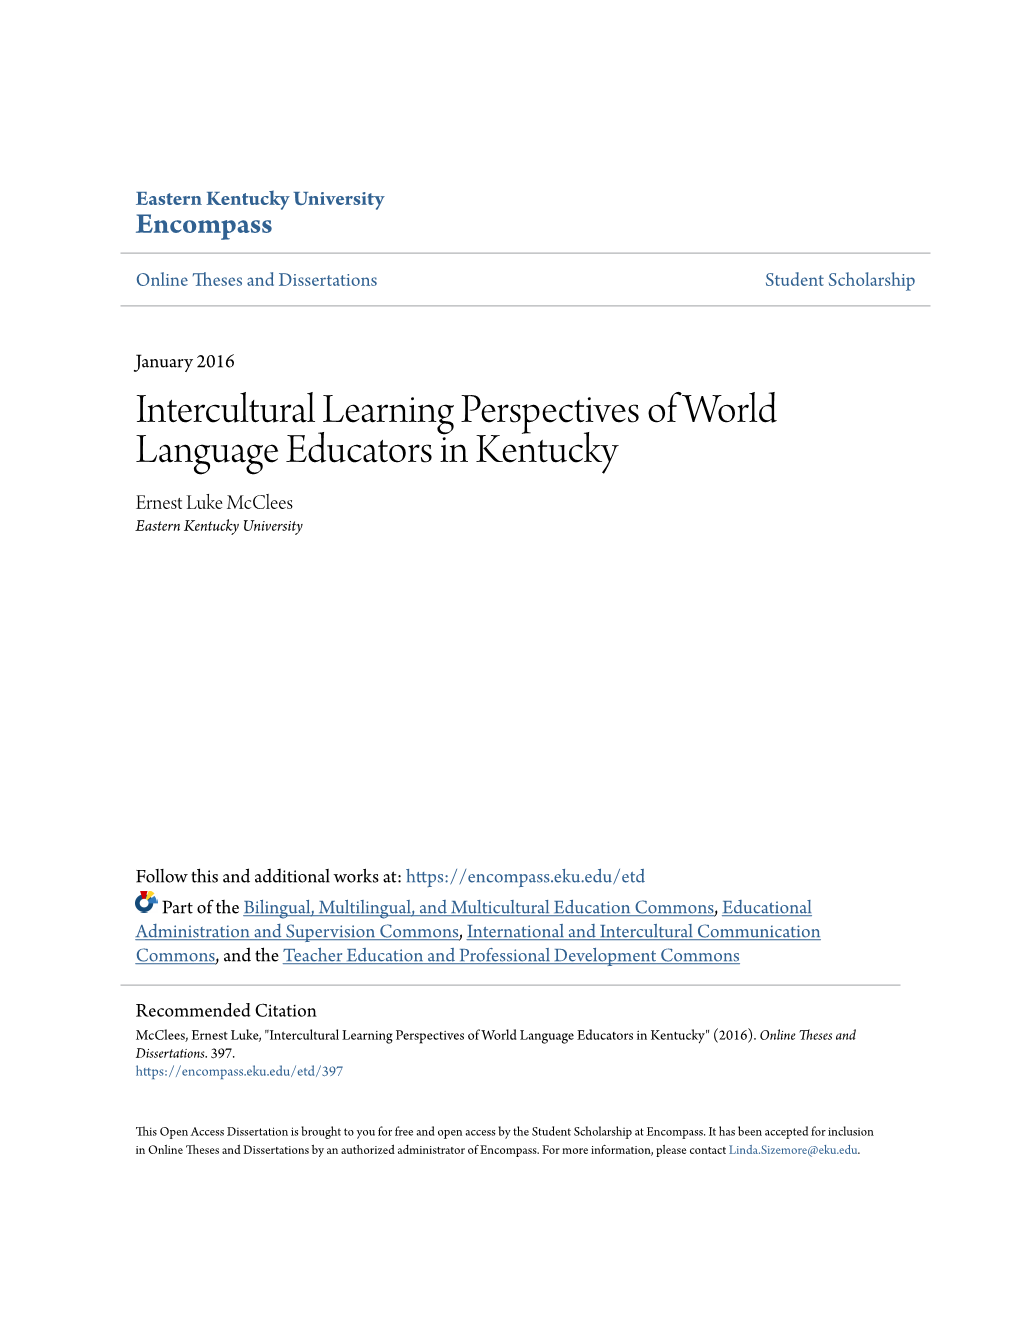 Intercultural Learning Perspectives of World Language Educators in Kentucky Ernest Luke Mcclees Eastern Kentucky University